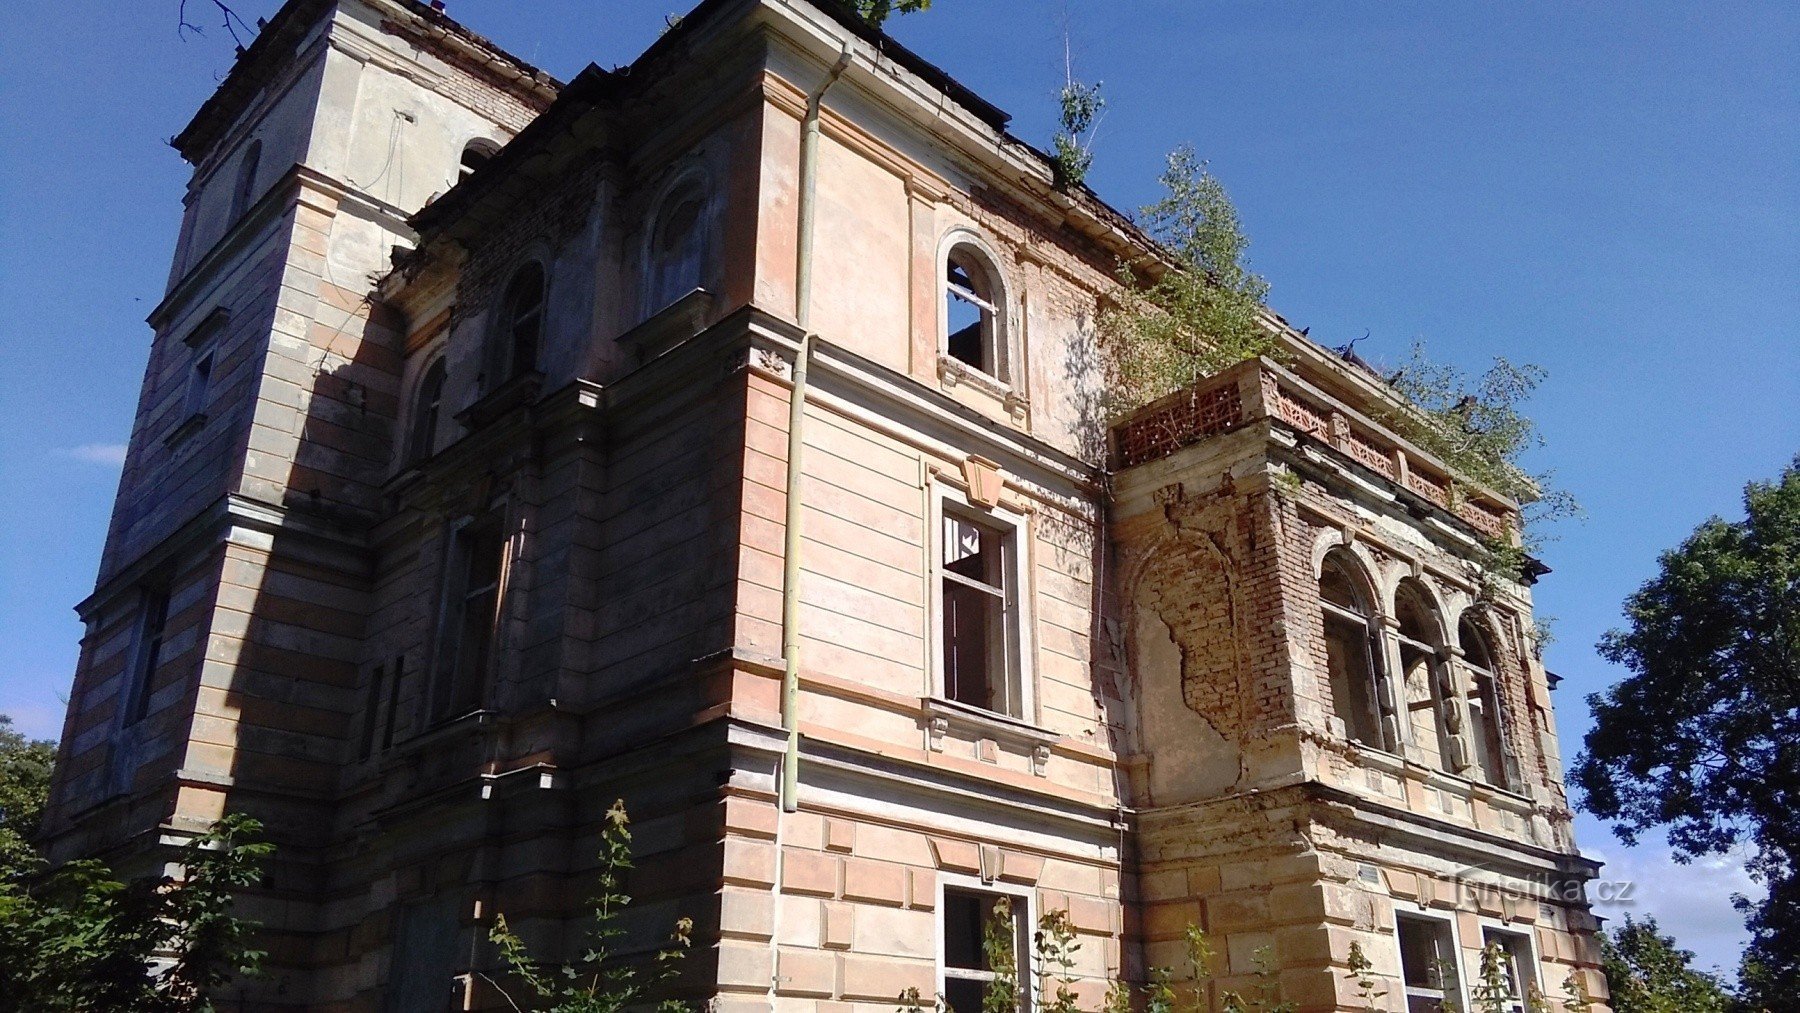 Dubí - vila, danas ruševina, nekoć reprezentativna rezidencija fabrikanta Tschinkela